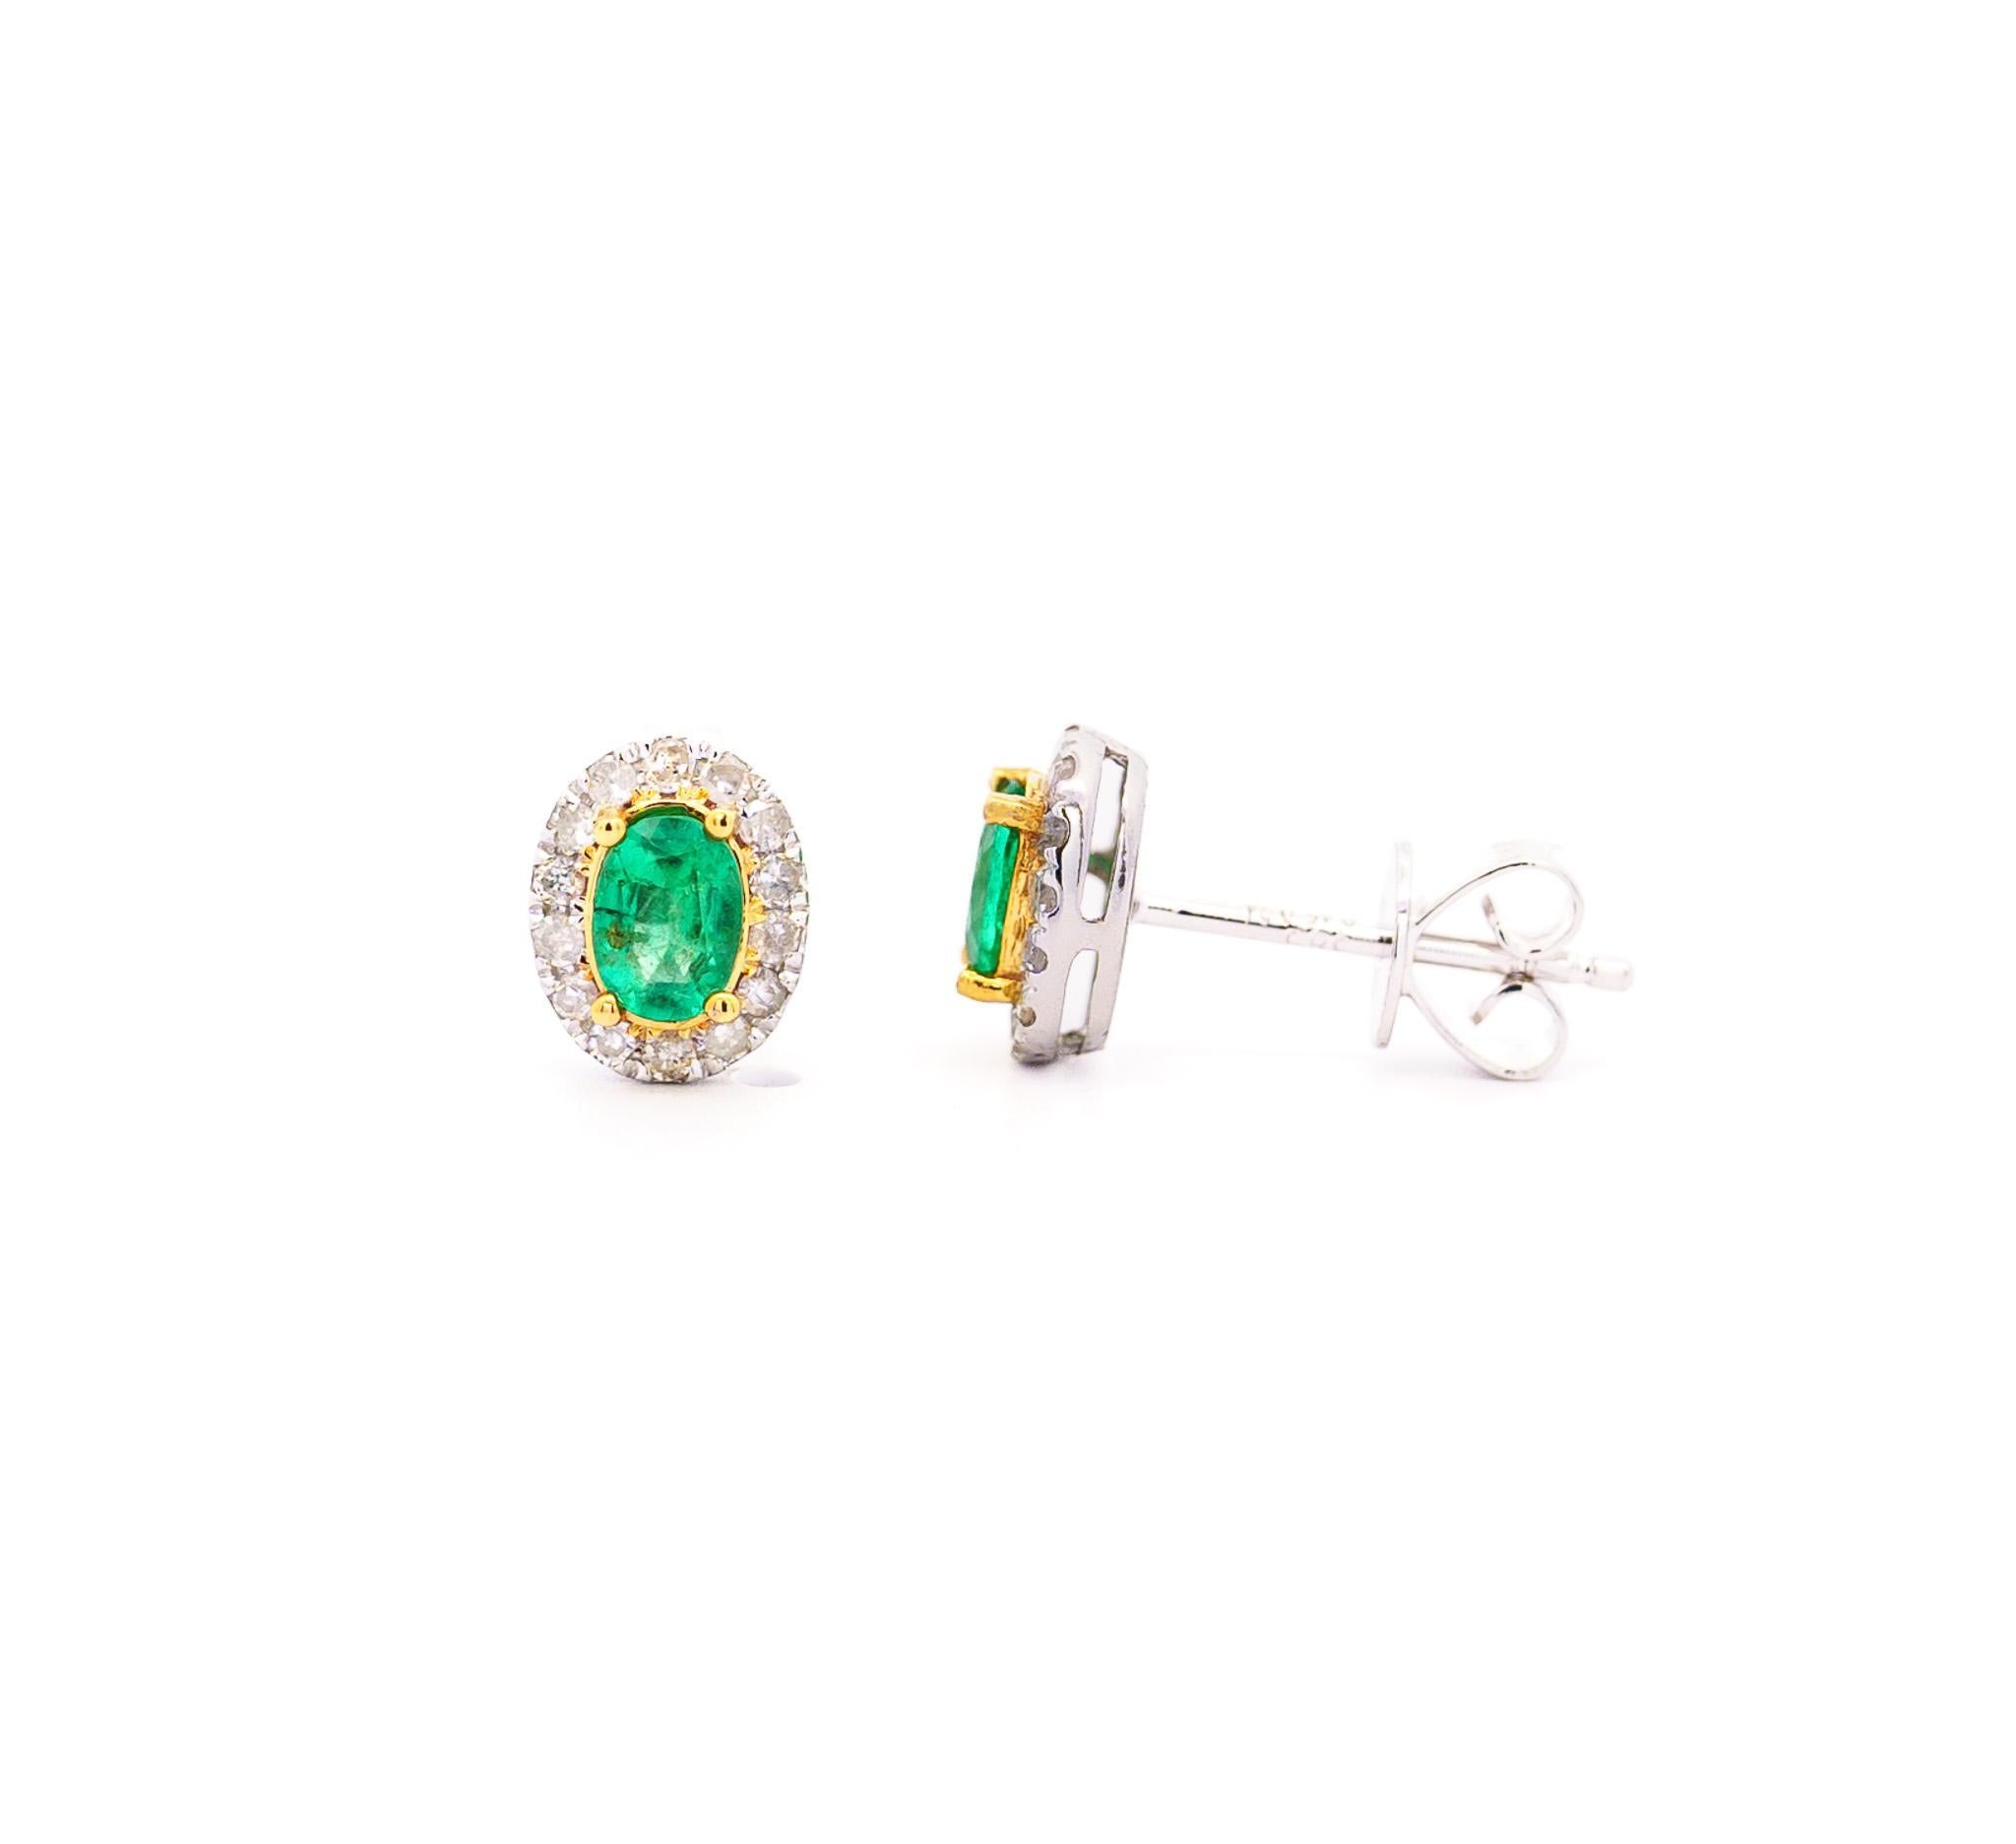 Oval Cut 1 Carat 5mm Oval Emerald & Diamond Halo Stud Earrings in 18k White Gold For Sale